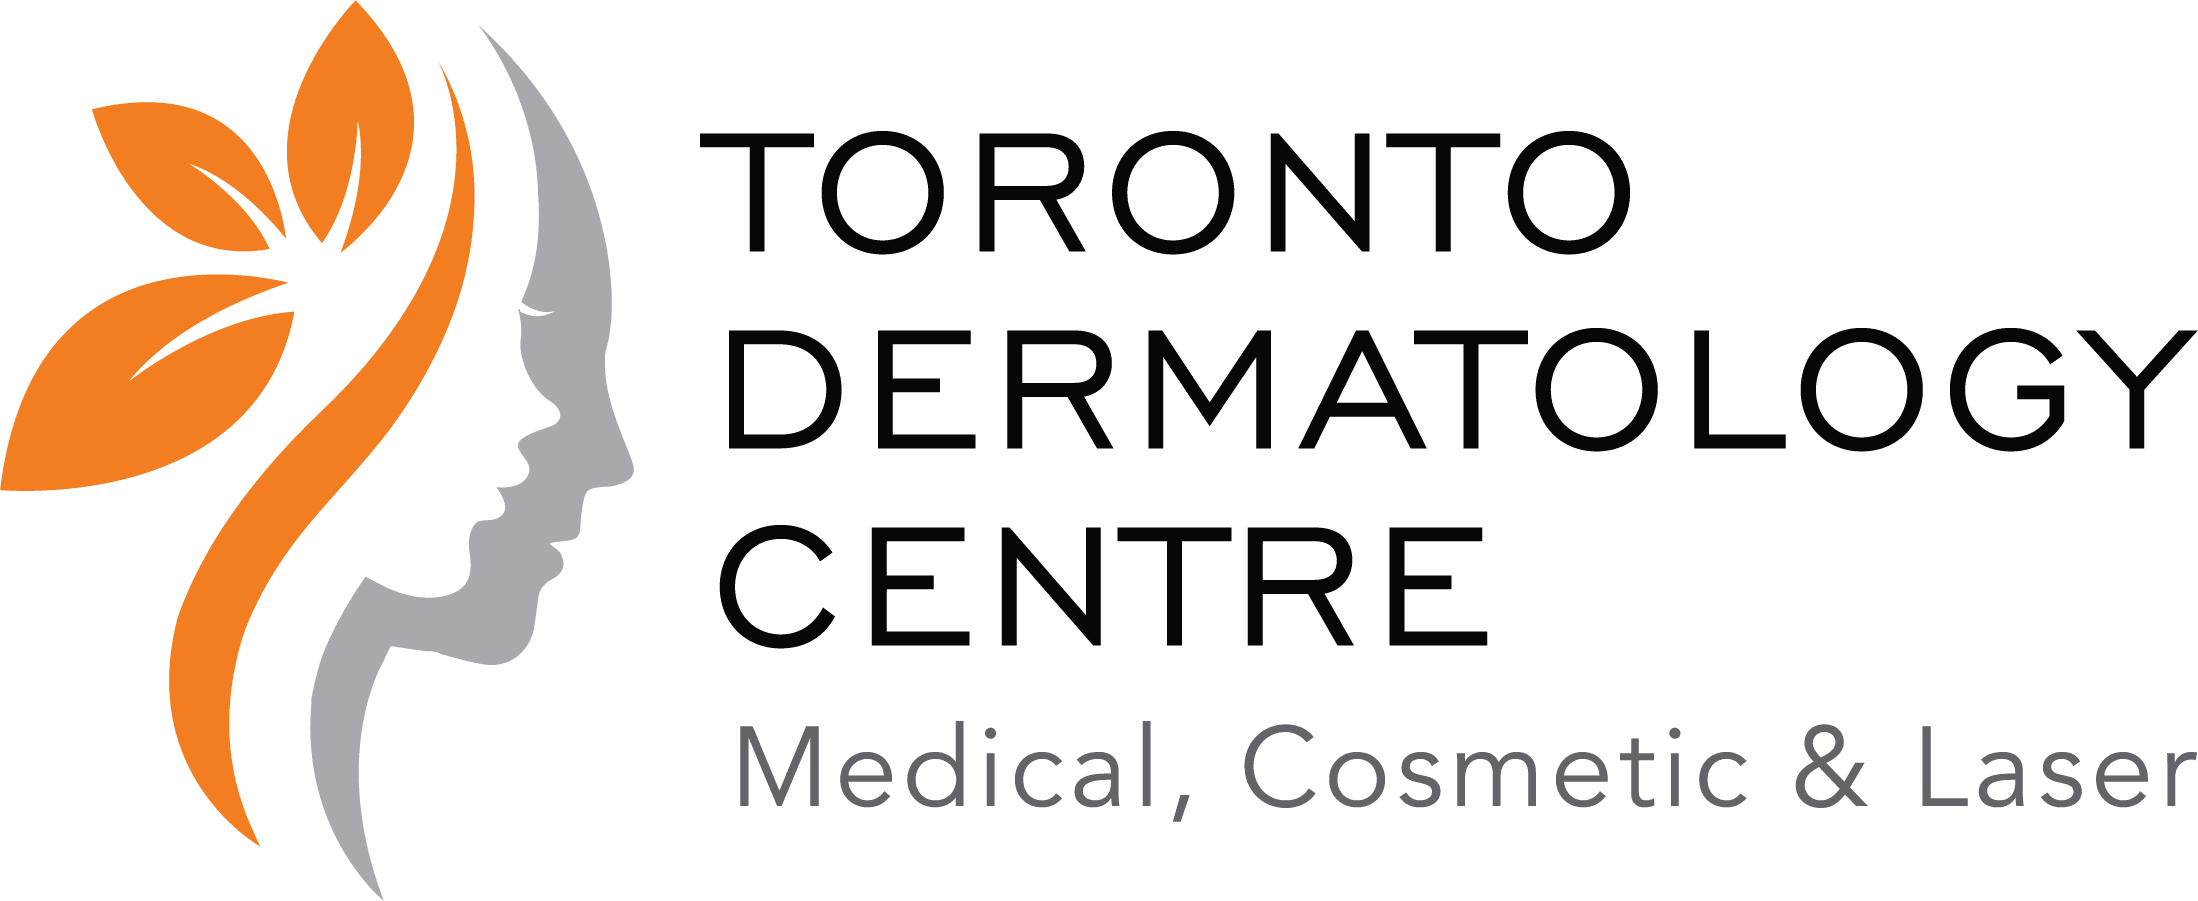 Toronto Dermatology Centre